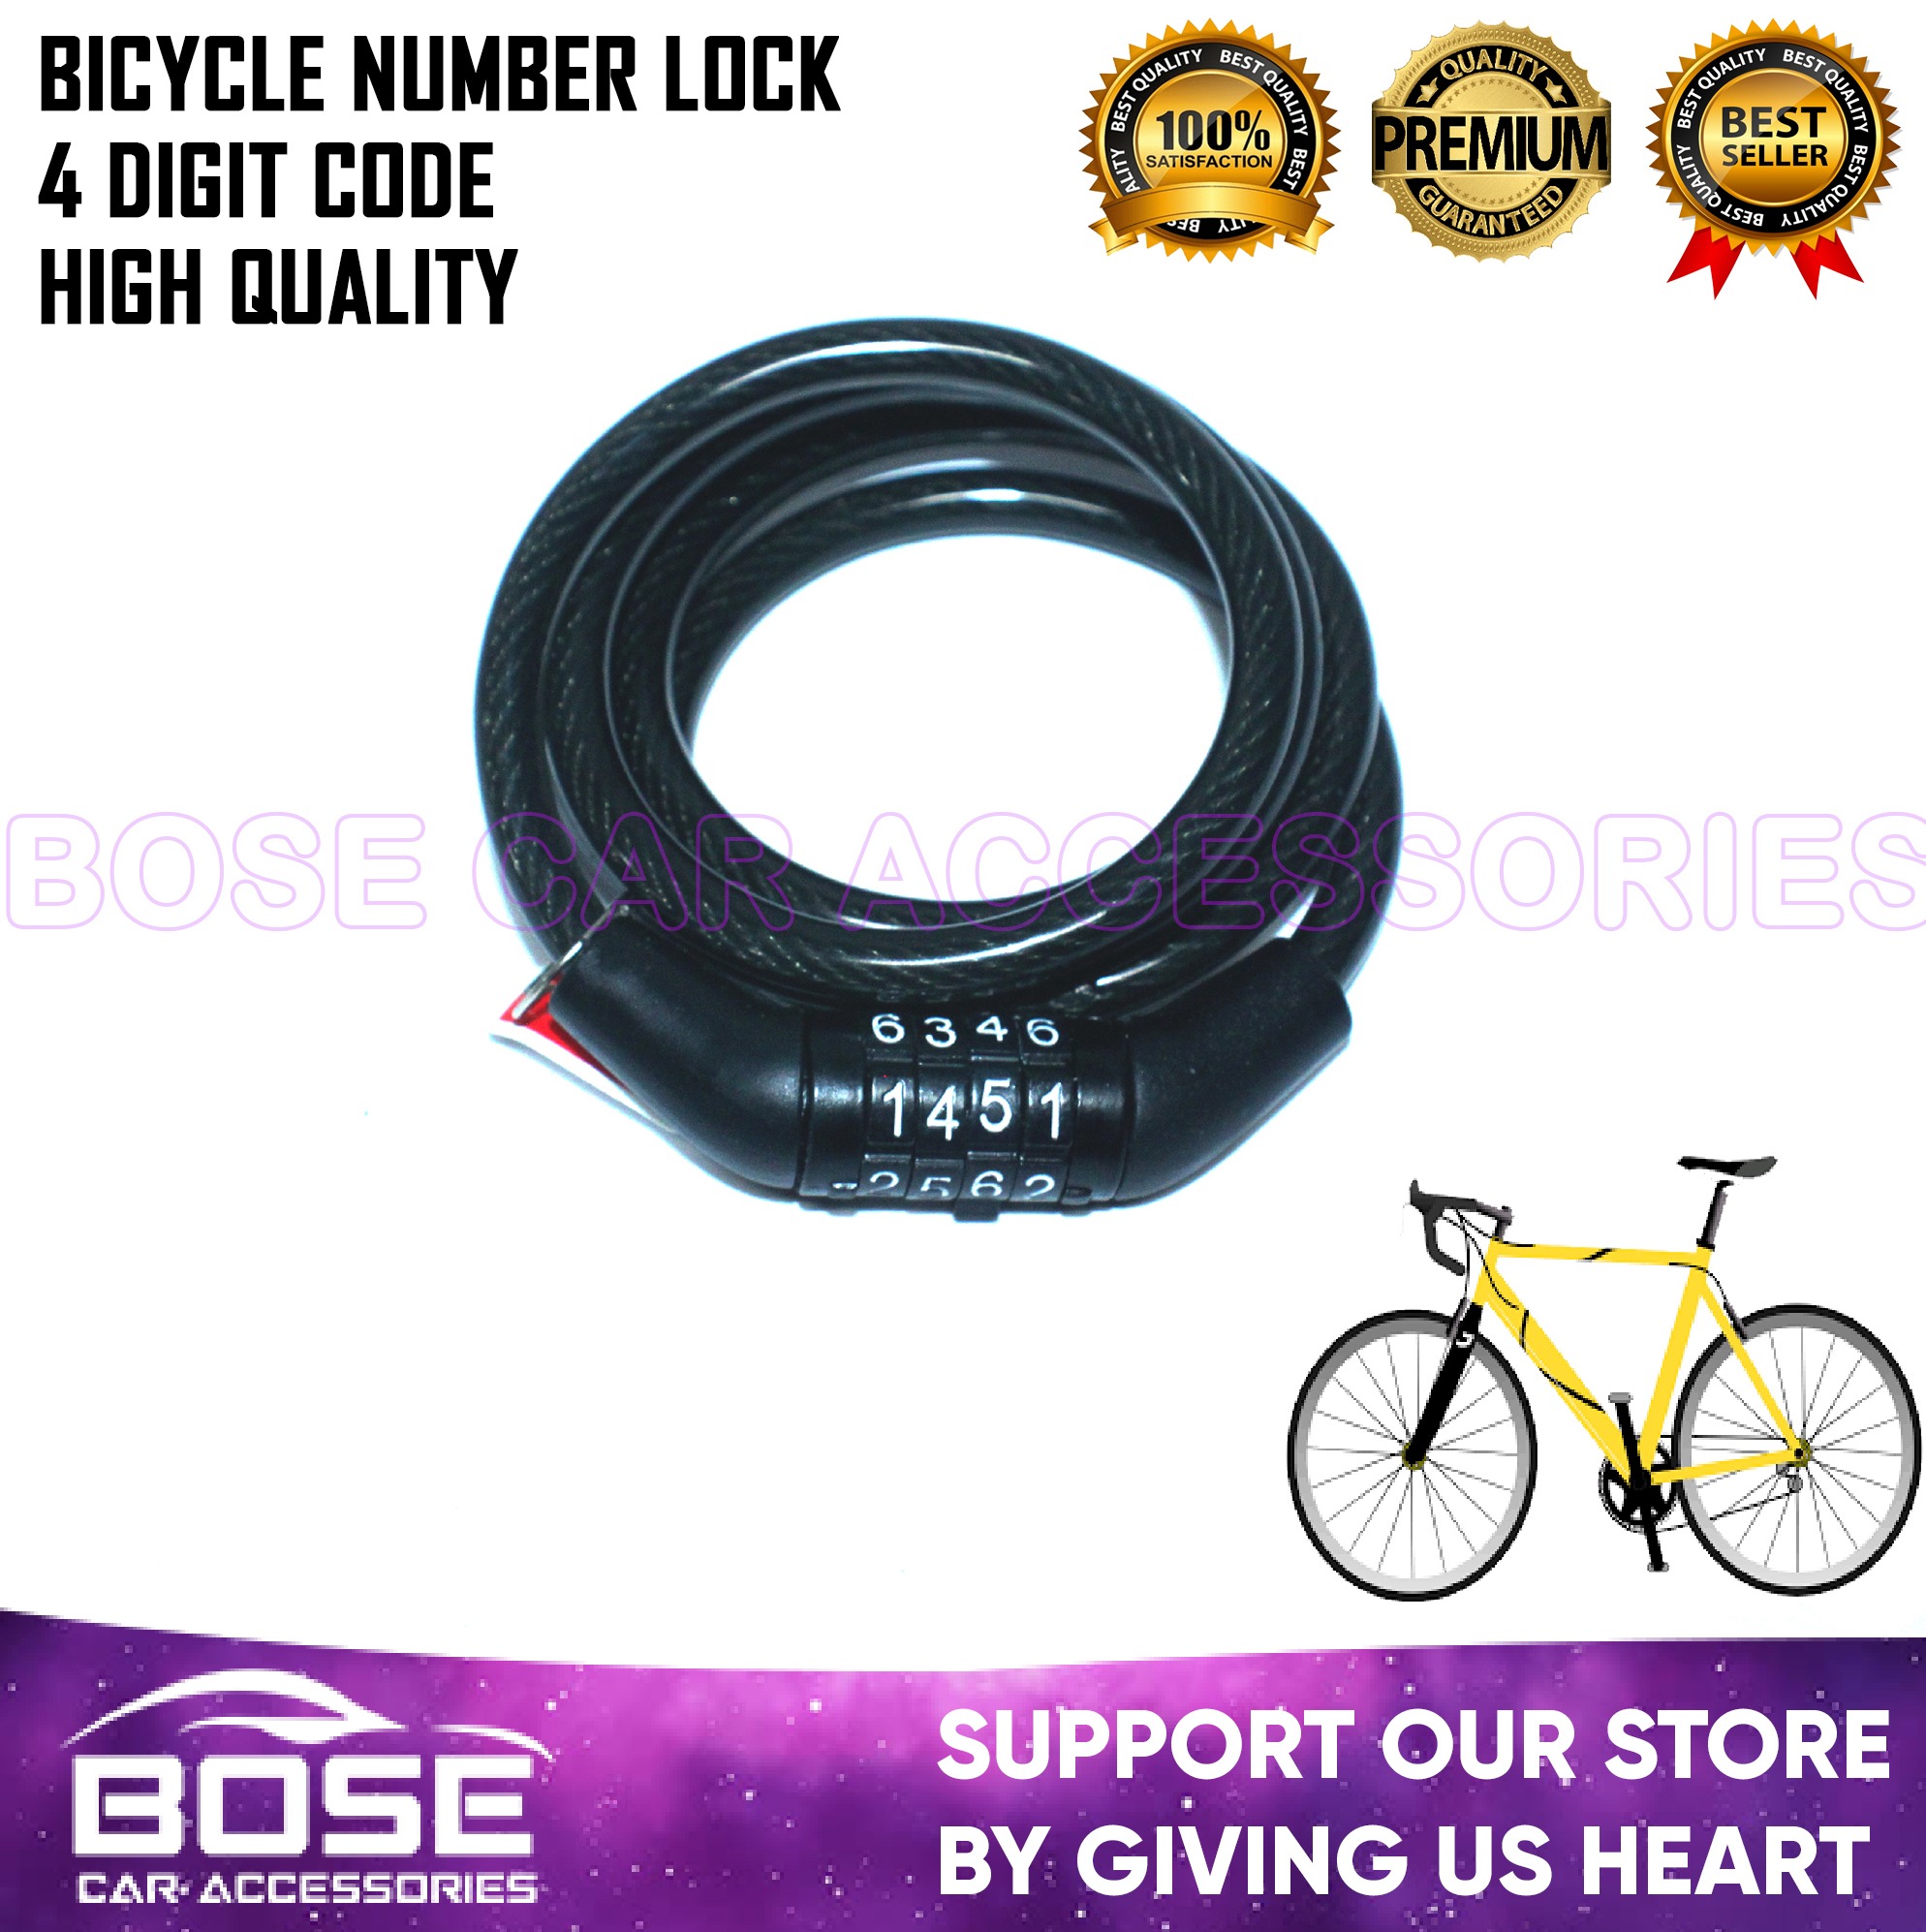 Buy Bicycle Lock Colored online | Lazada.com.ph